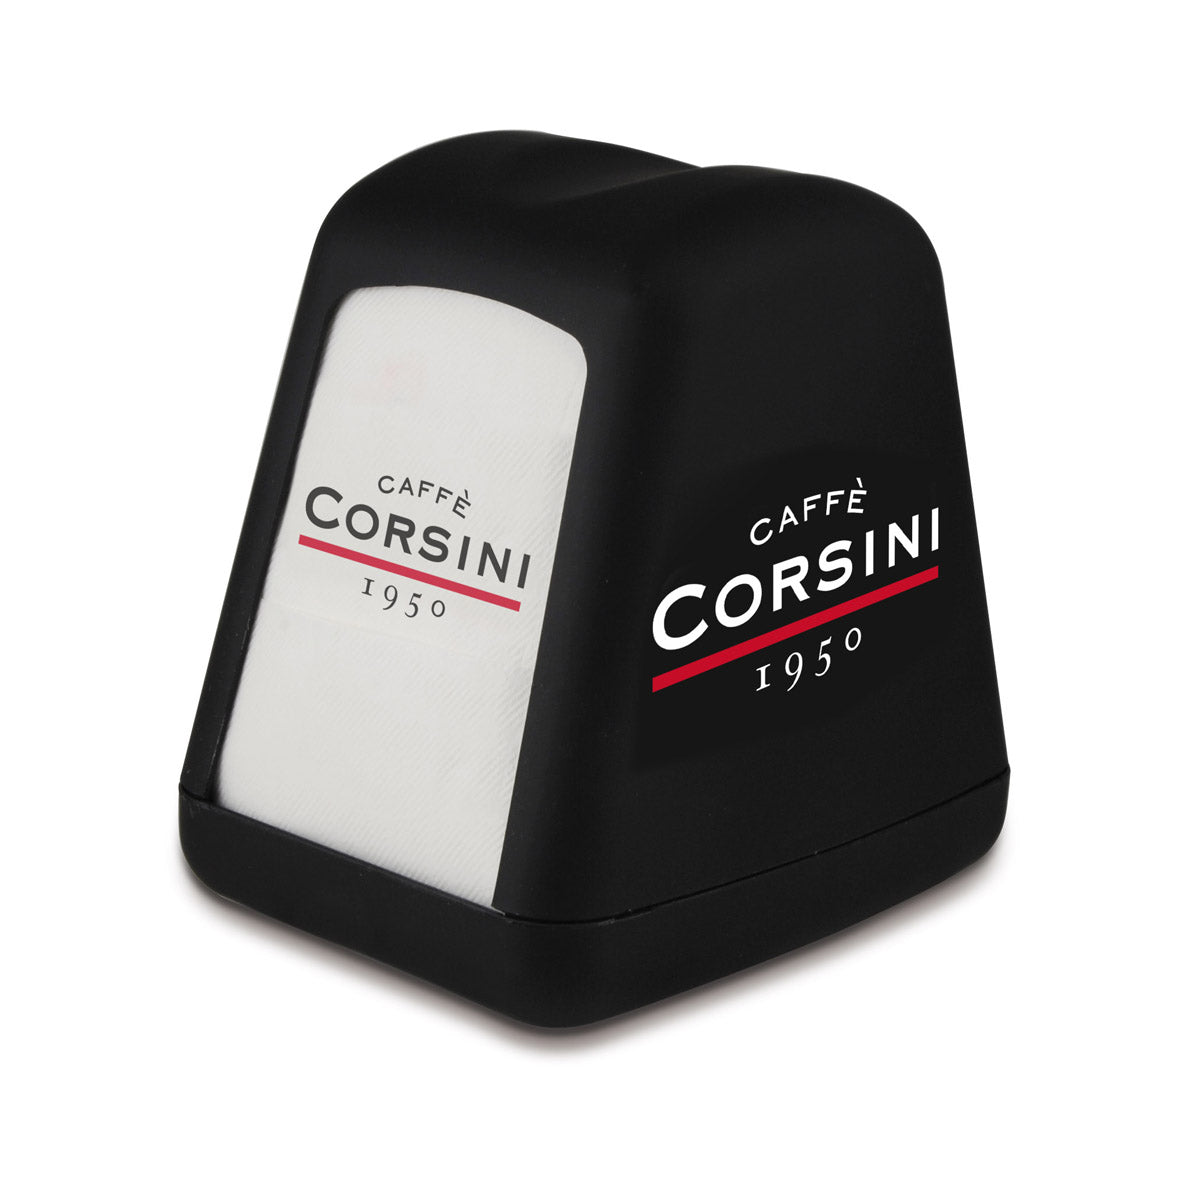 Caffè Corsini napkindispenser with double sided load